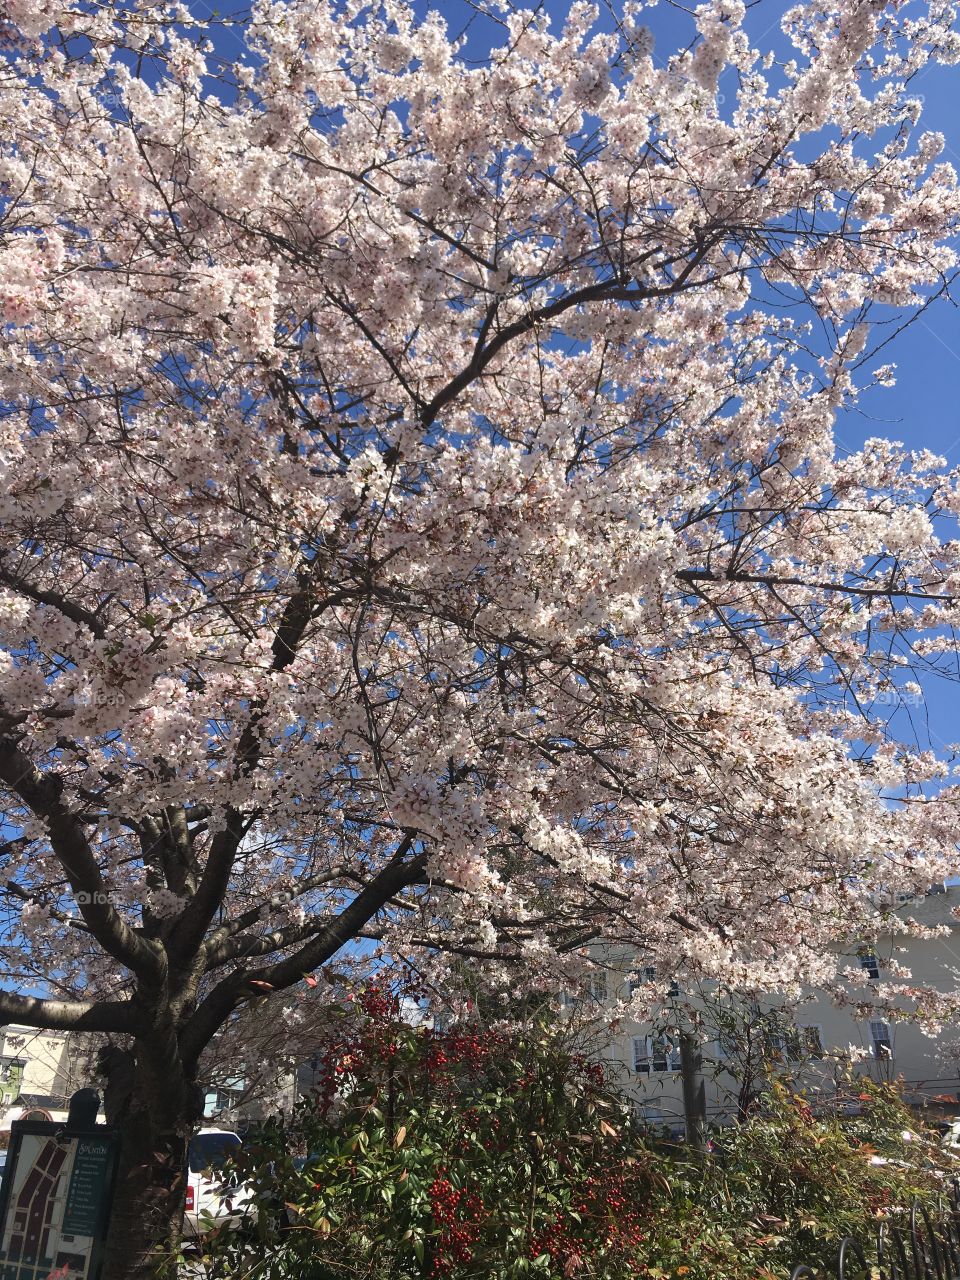 Tree in bloom, Virginia, March 2017